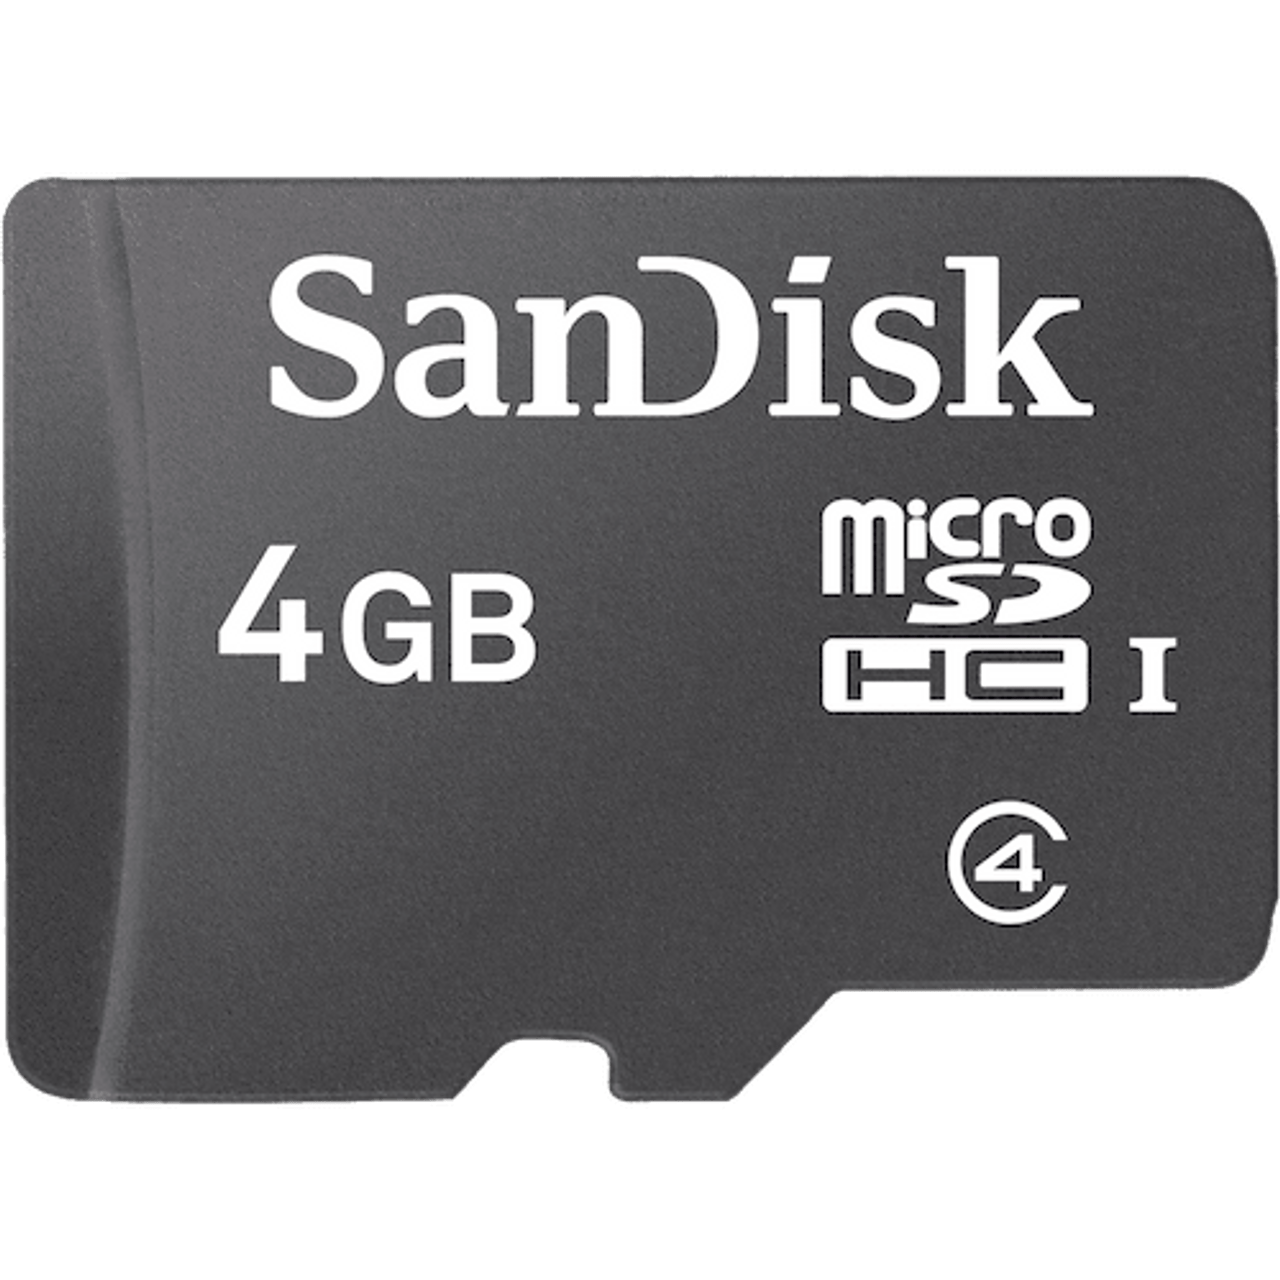 Формат микро. Карта памяти SANDISK 32 ГБ. САНДИСК 32 ГБ микро СД. Микро флешка СД на 8 ГБ. Карта памяти SANDISK MICROSDHC Card 32gb class 4.